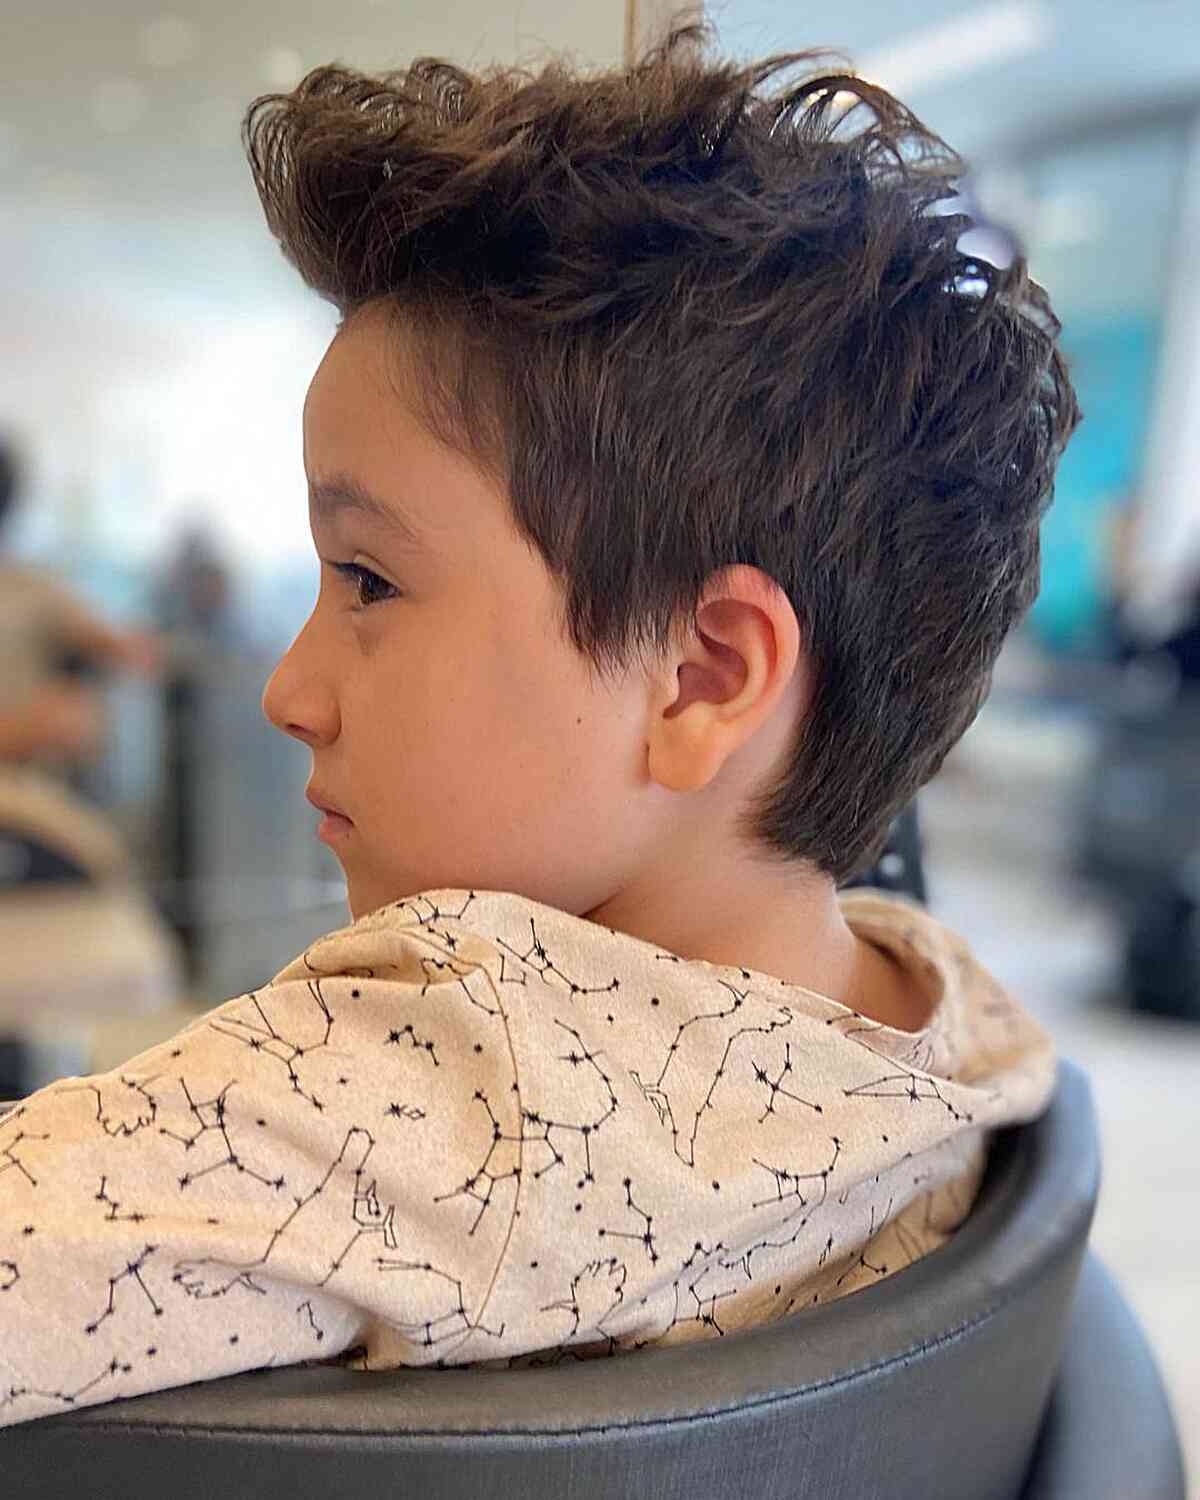 10 Simple Hair Styles For Boys Trending in 2022 - The Hair Trend